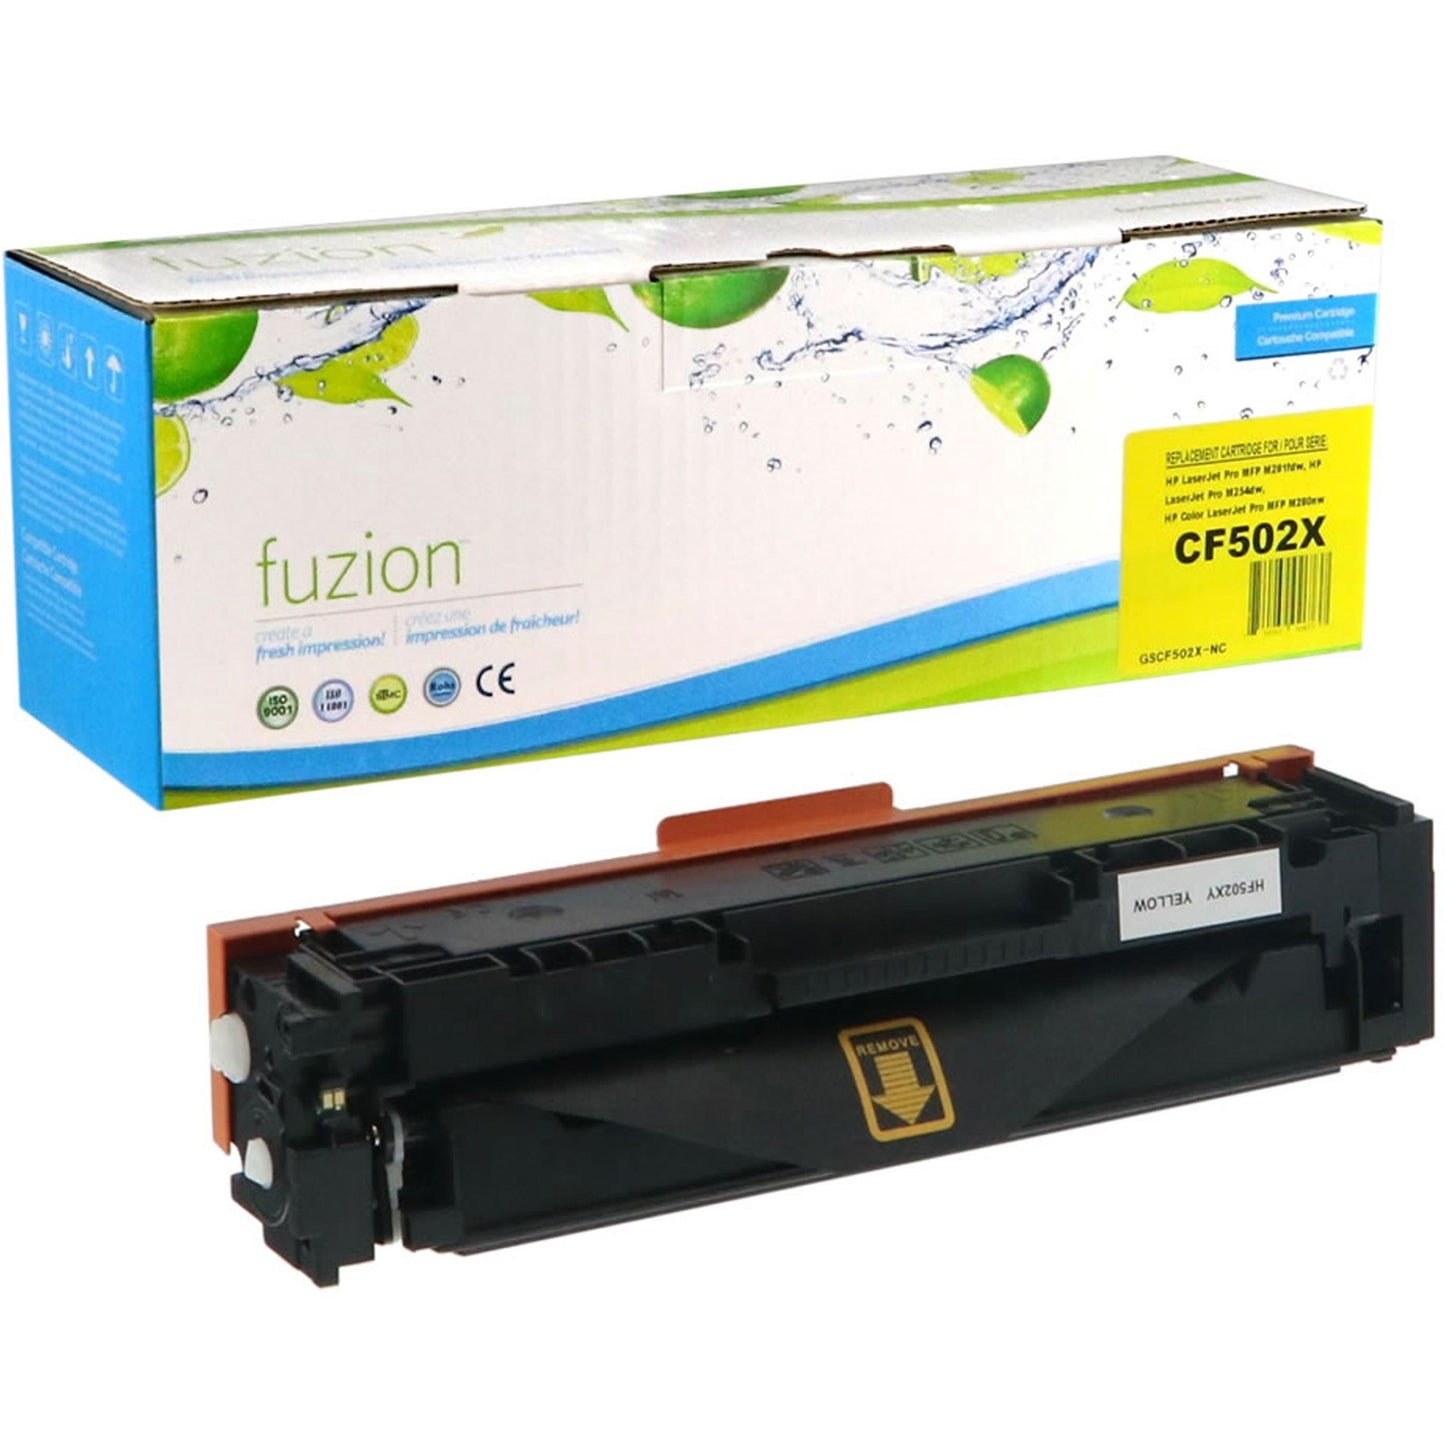 fuzion Remanufactured Toner Cartridge - Alternative for HP 202X - Yellow